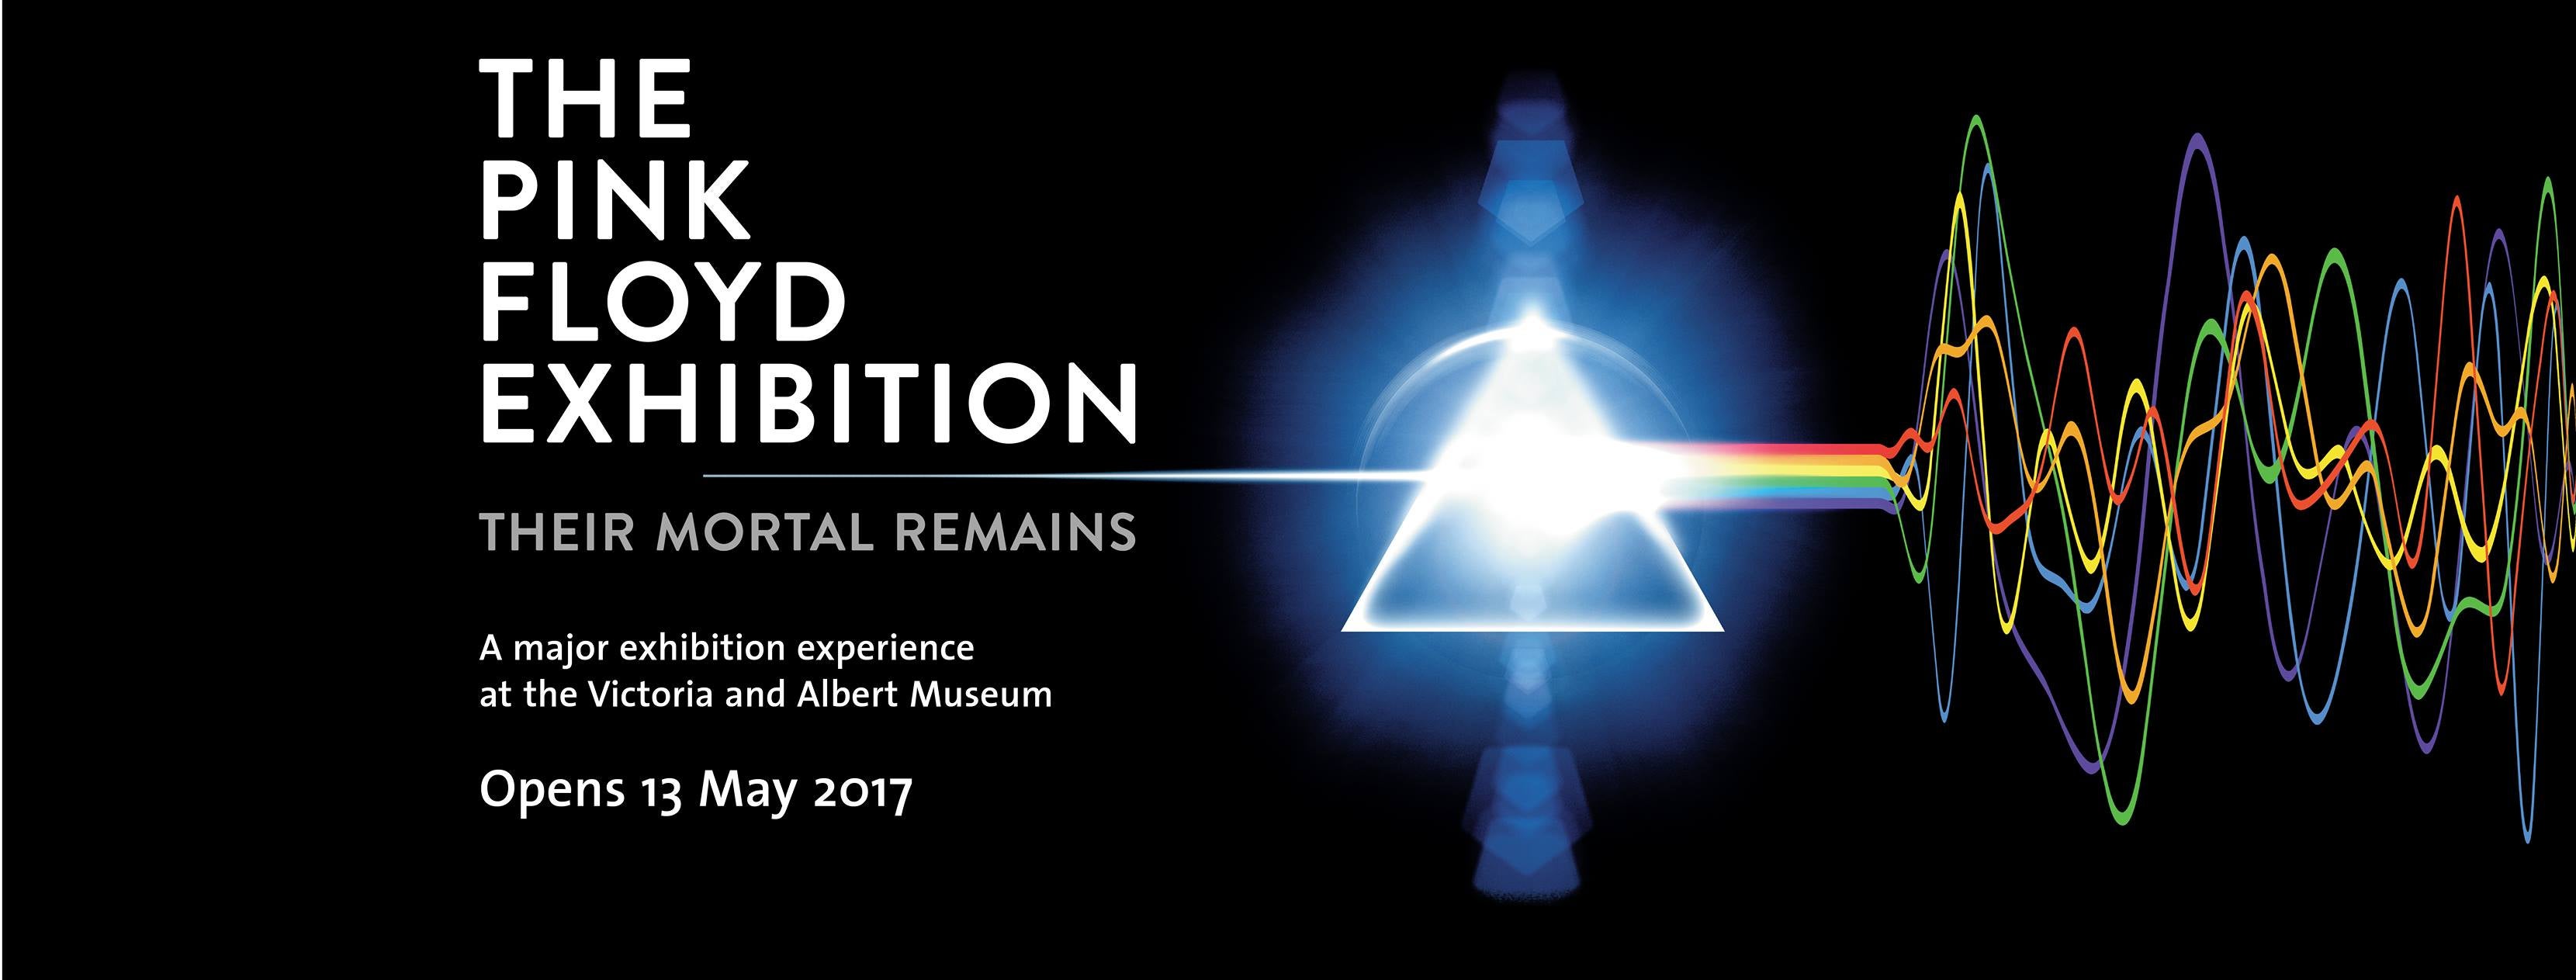 Die Pink Floyd Ausstellung in London: Their Mortal Remains